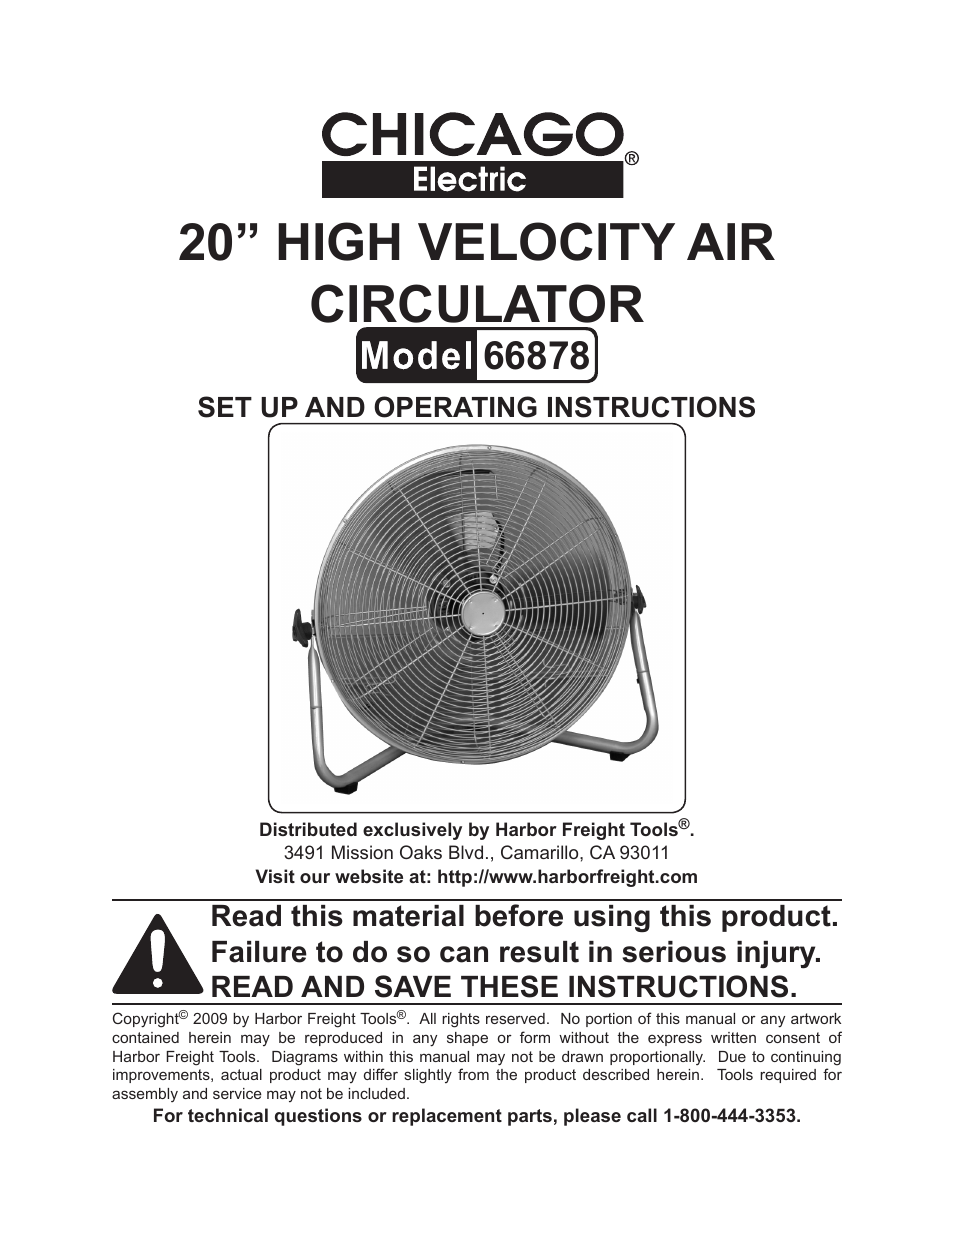 20" High Velocity Air Circulator 66878